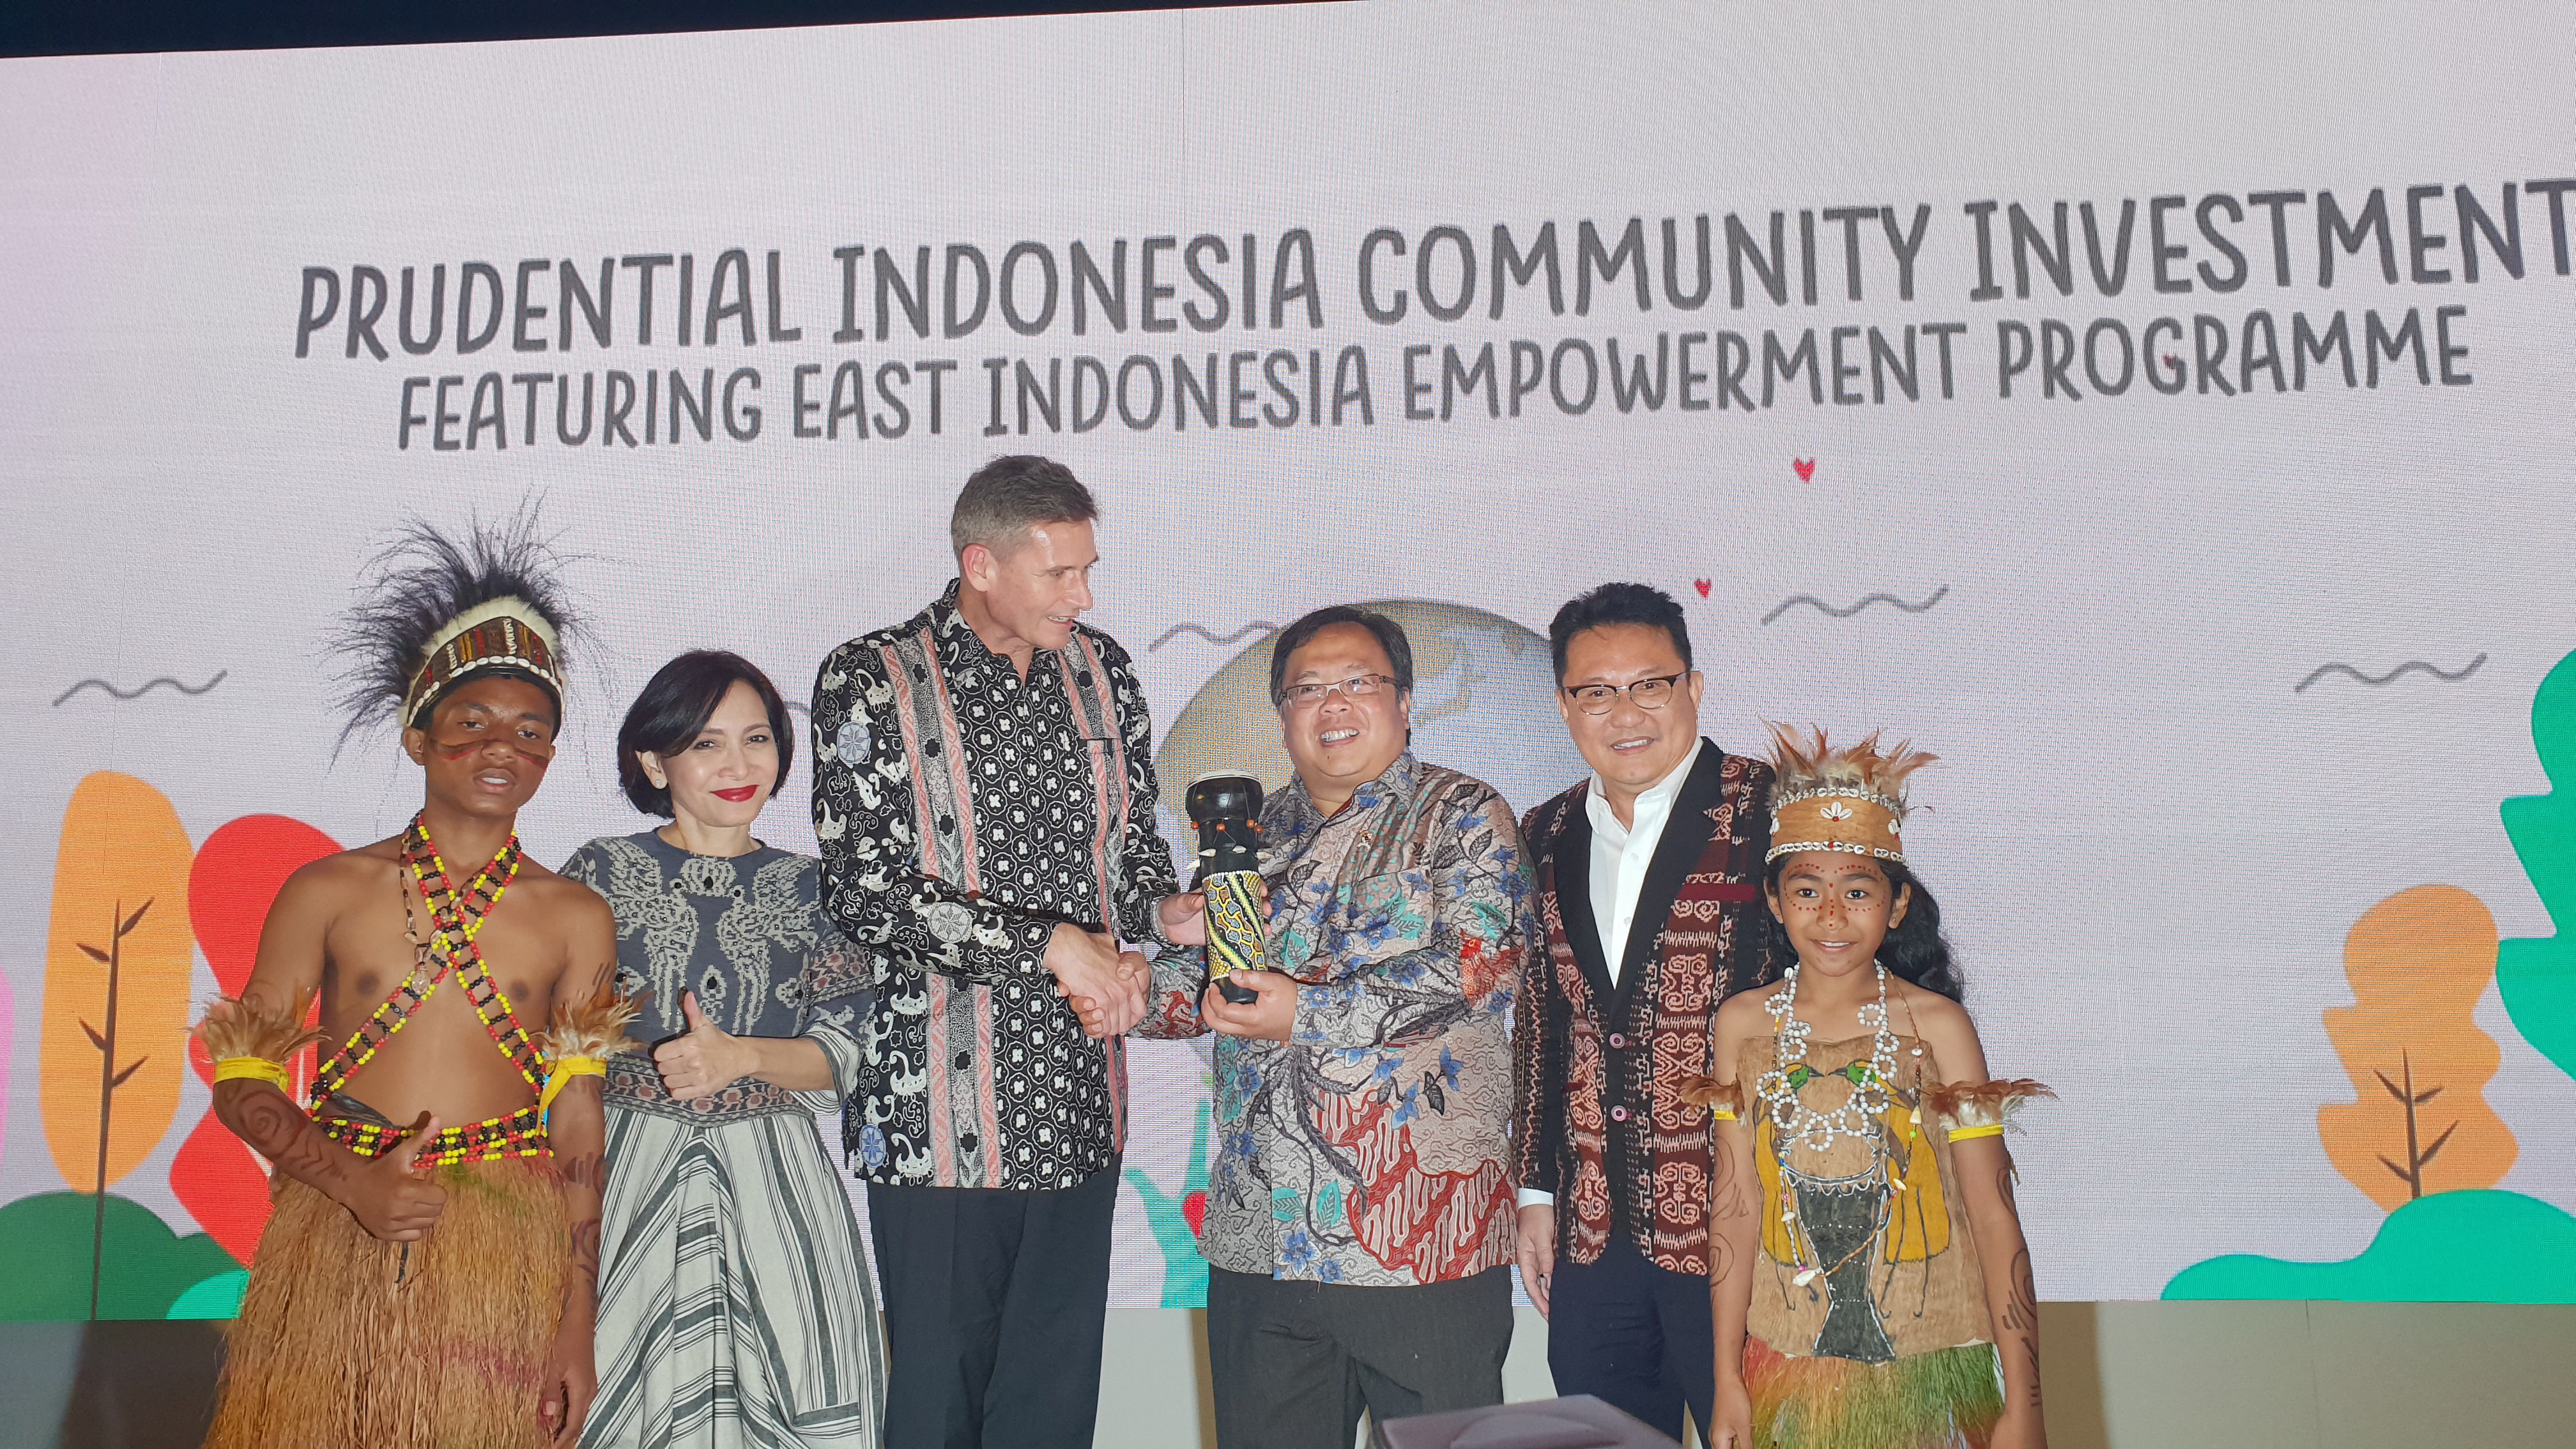 #PRUCommunityInvestment #EastIndonesiaEmpowerment #PrudentialIndonesia #CommunityInvestmentPrudentialIndonesia #CommunityInvestment #Prudential #Papua